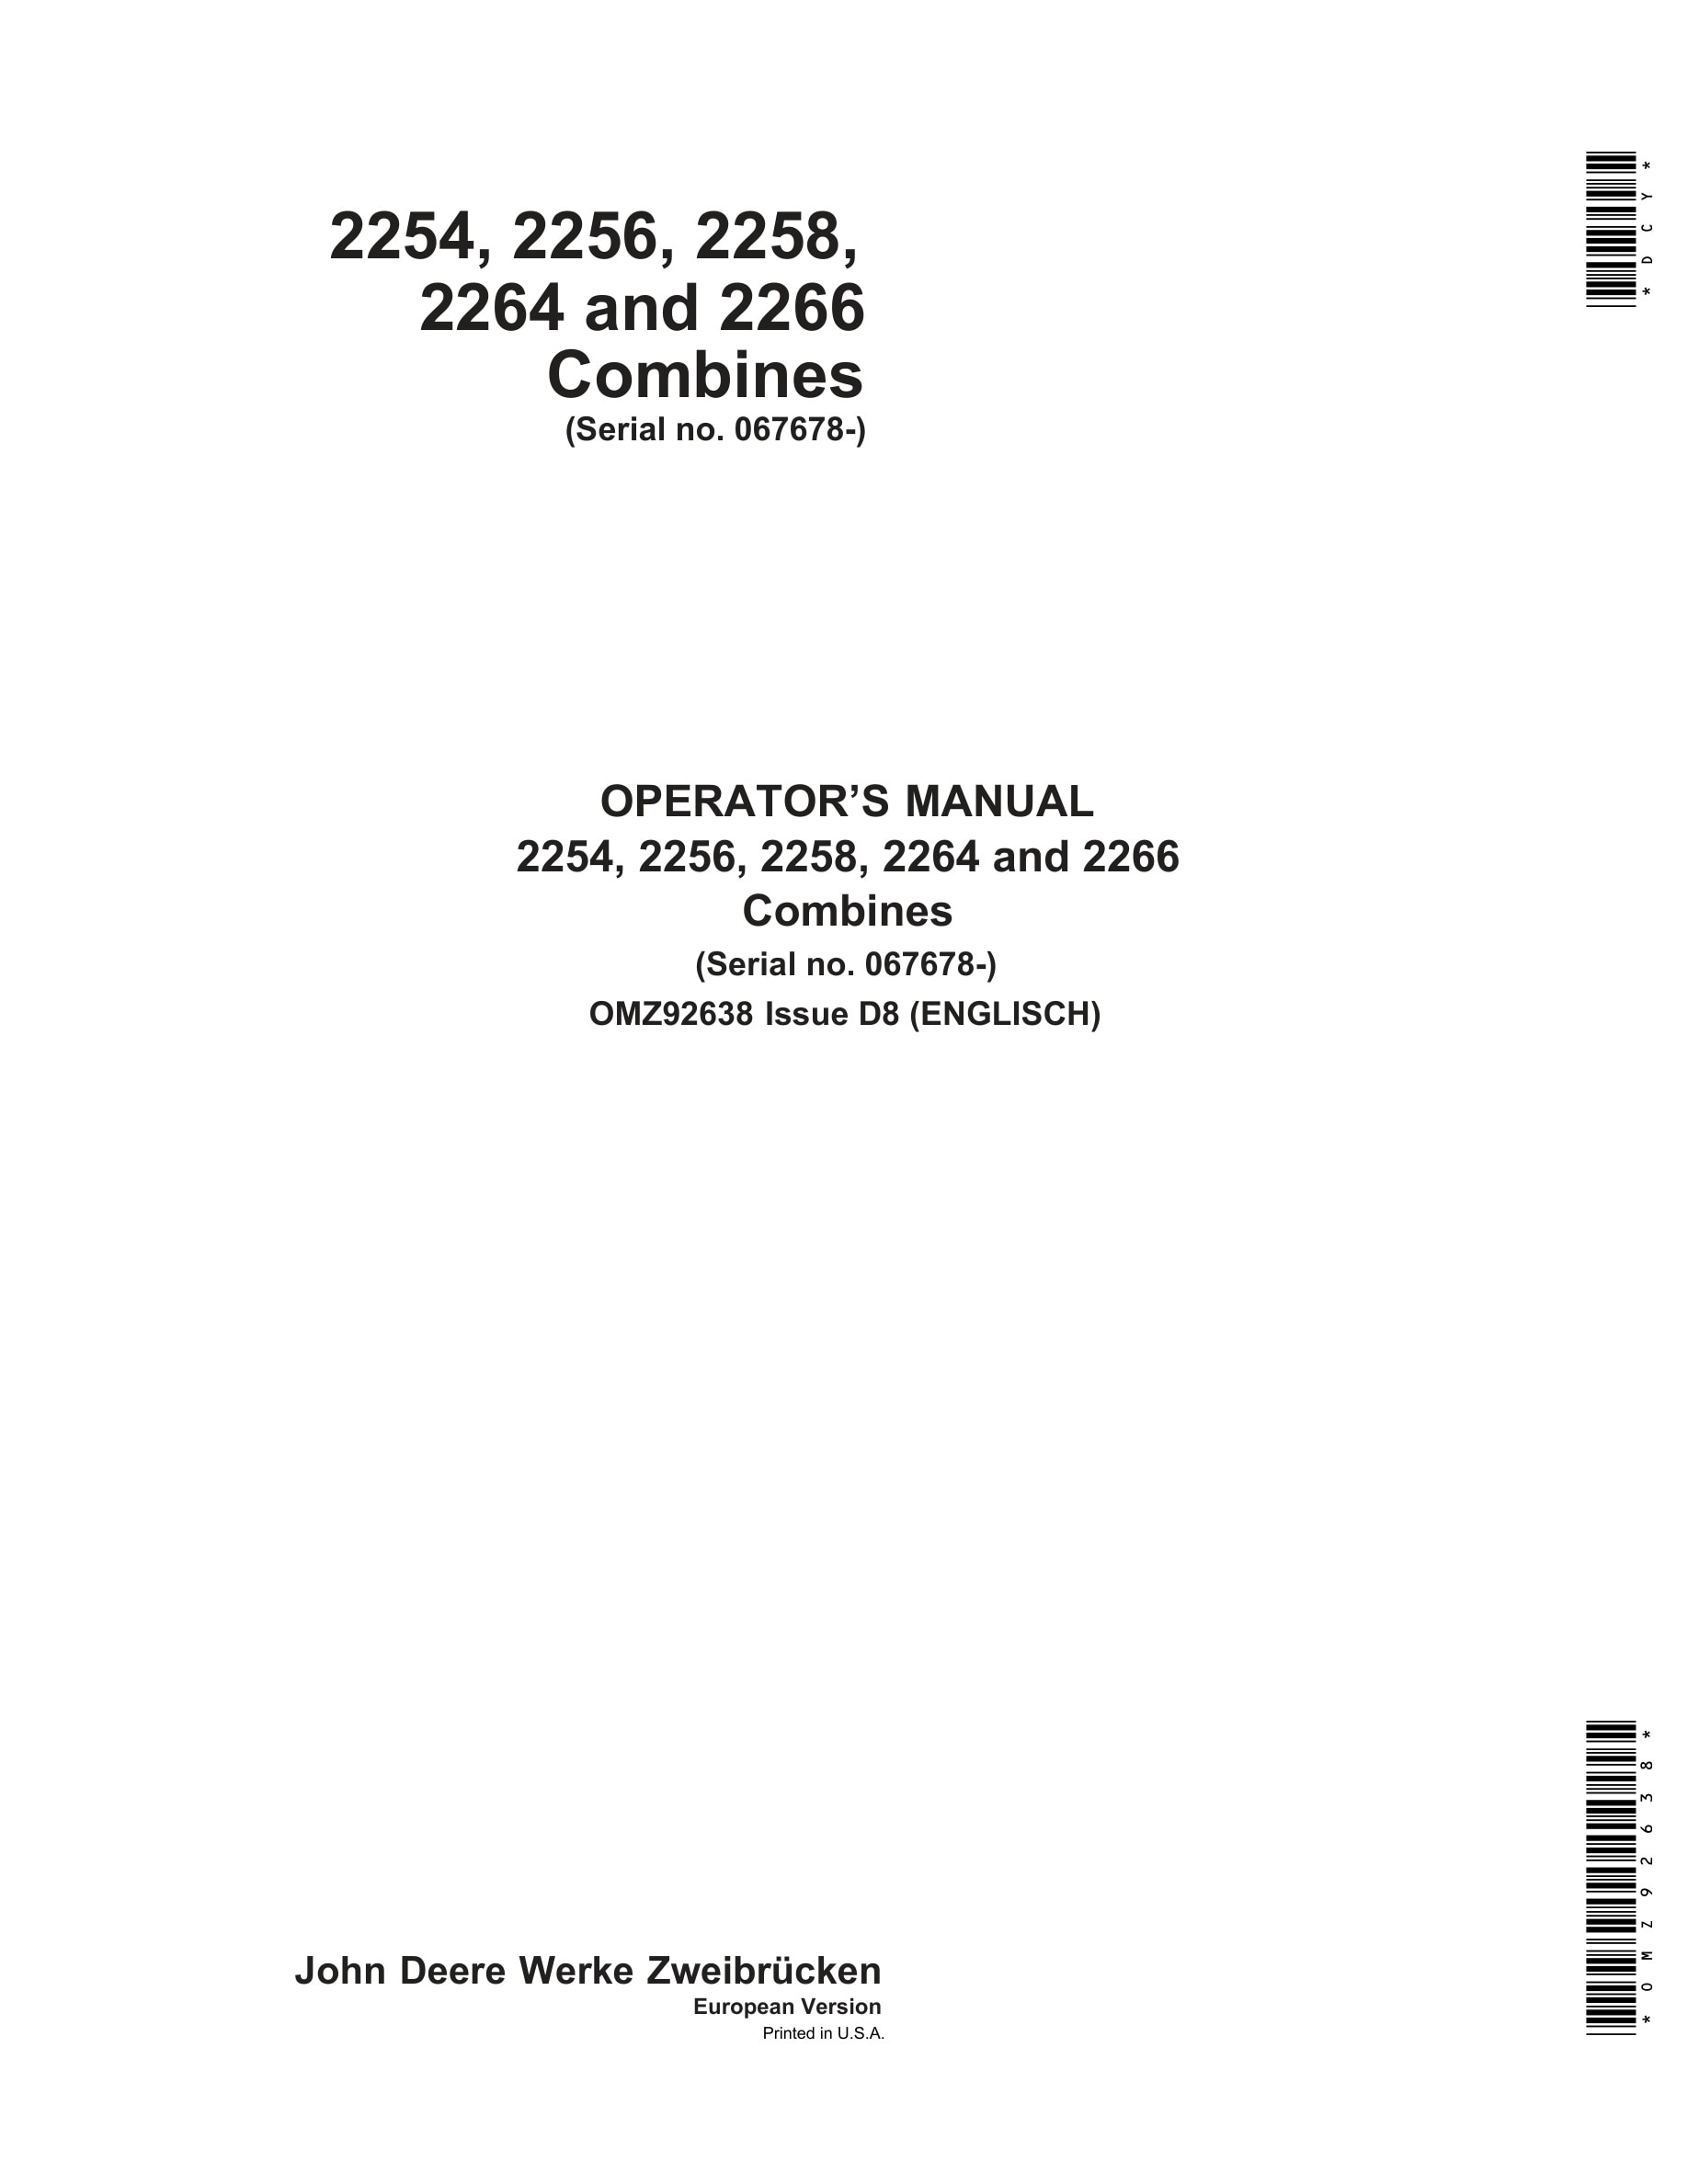 John Deere 2254, 2256, 2258, 2264 and 2266 Combine Operator Manual OMZ92638-1